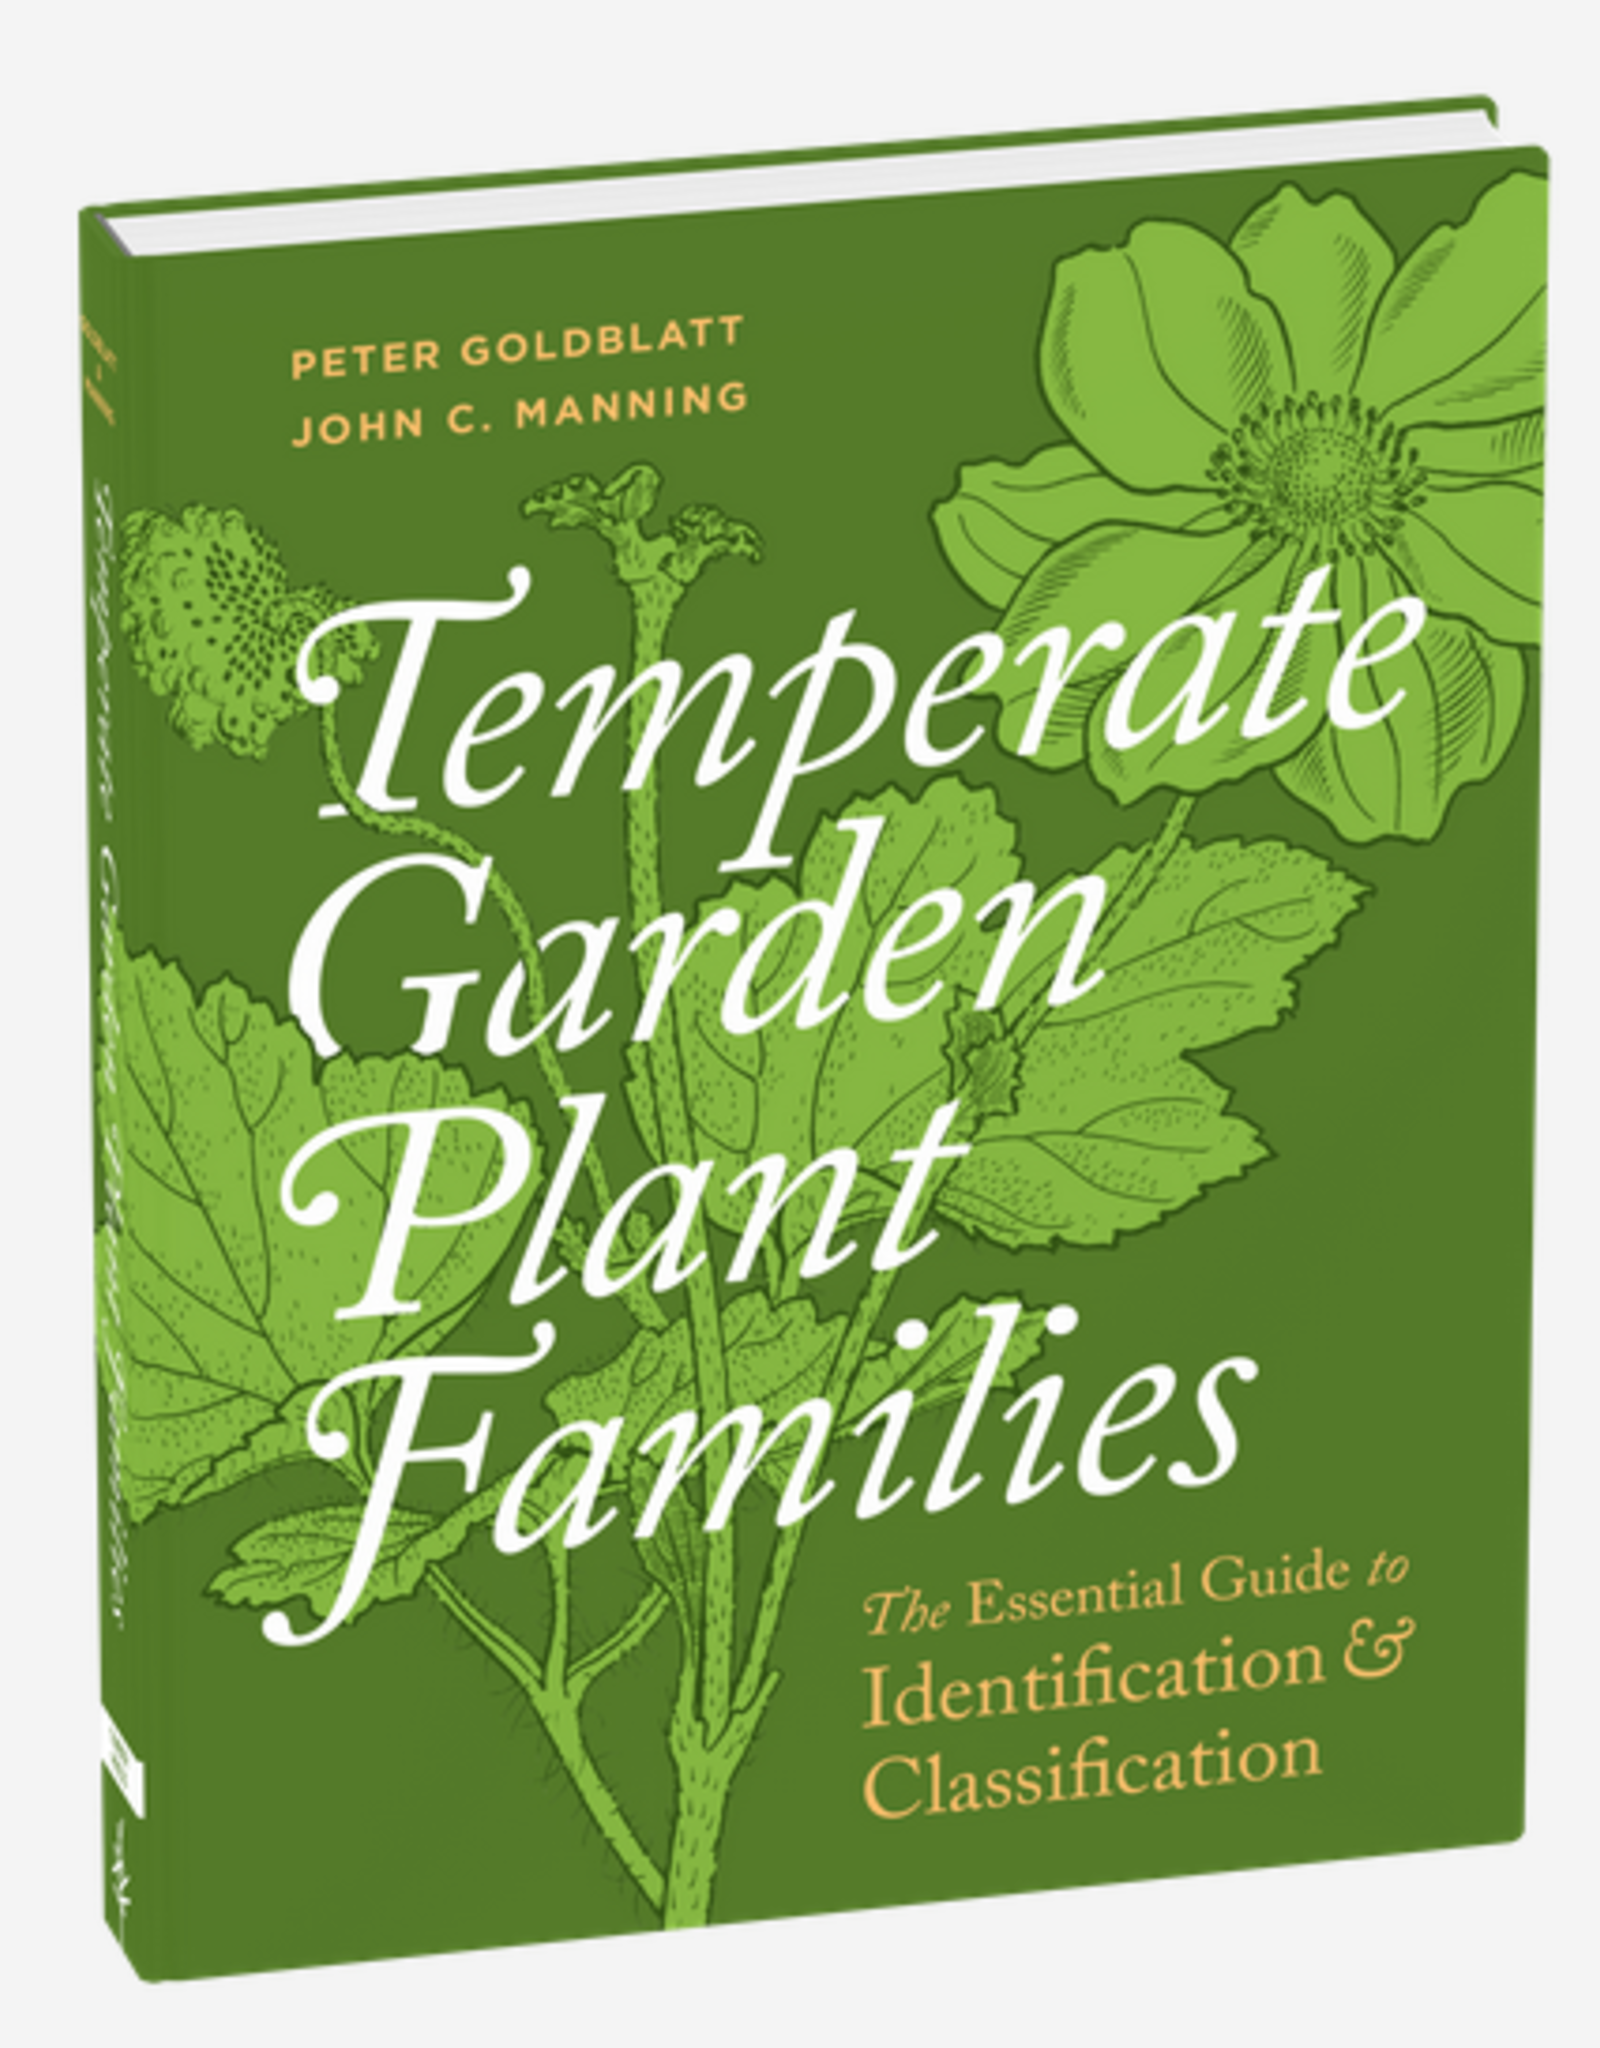 Temperate Garden Plant Families